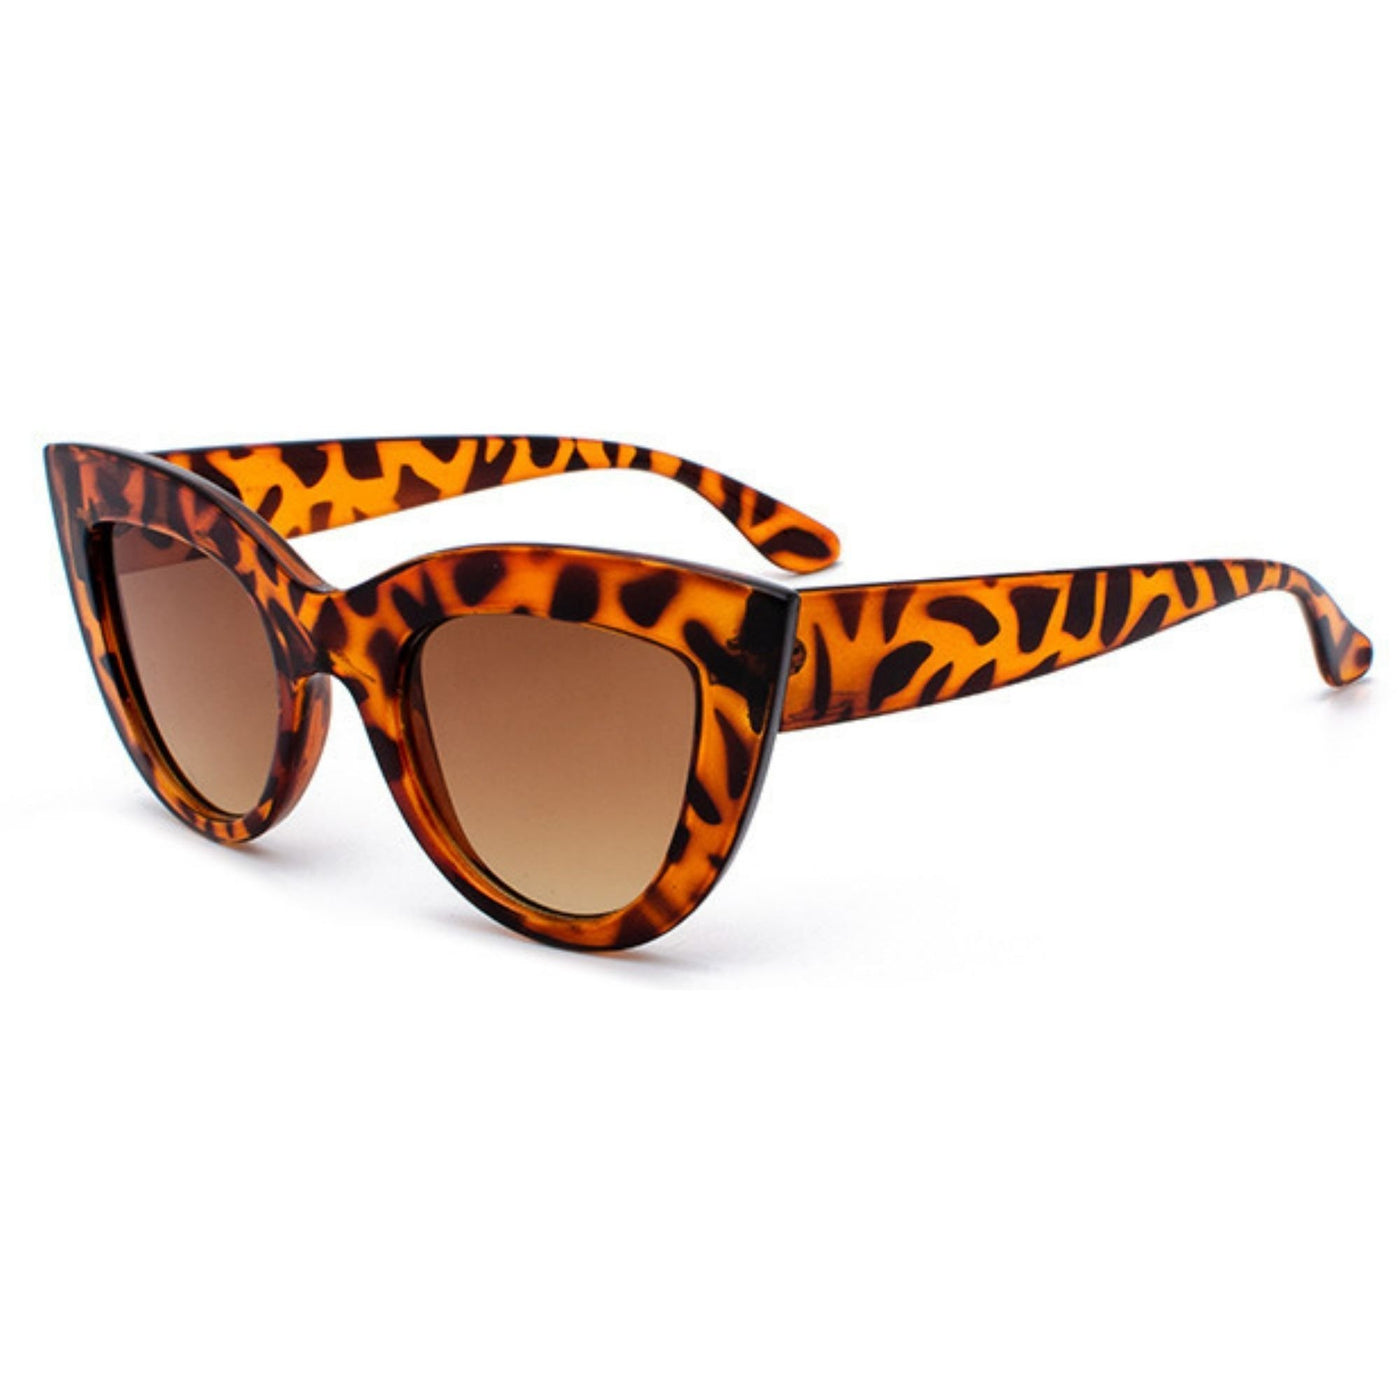 Pheobe Buffay Leopard Eyewear For Men And Women-Unique and Classy